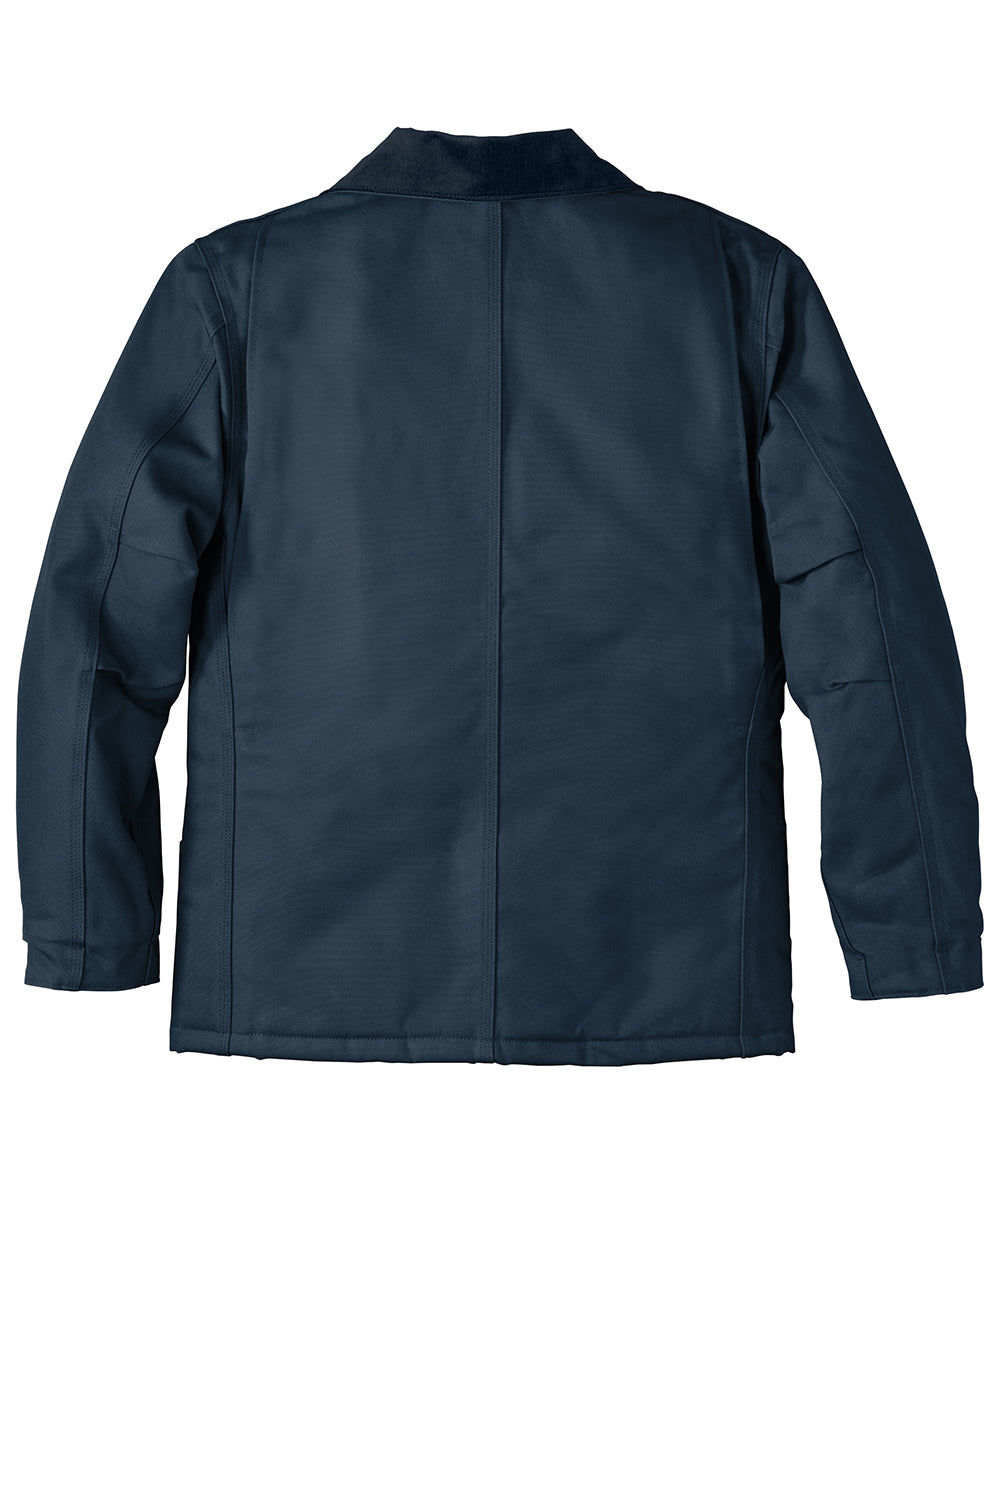 Carhartt CTC003/CTTC003 Mens Wind & Water Resistant Duck Cloth Full Zip Jacket Navy Blue Flat Back